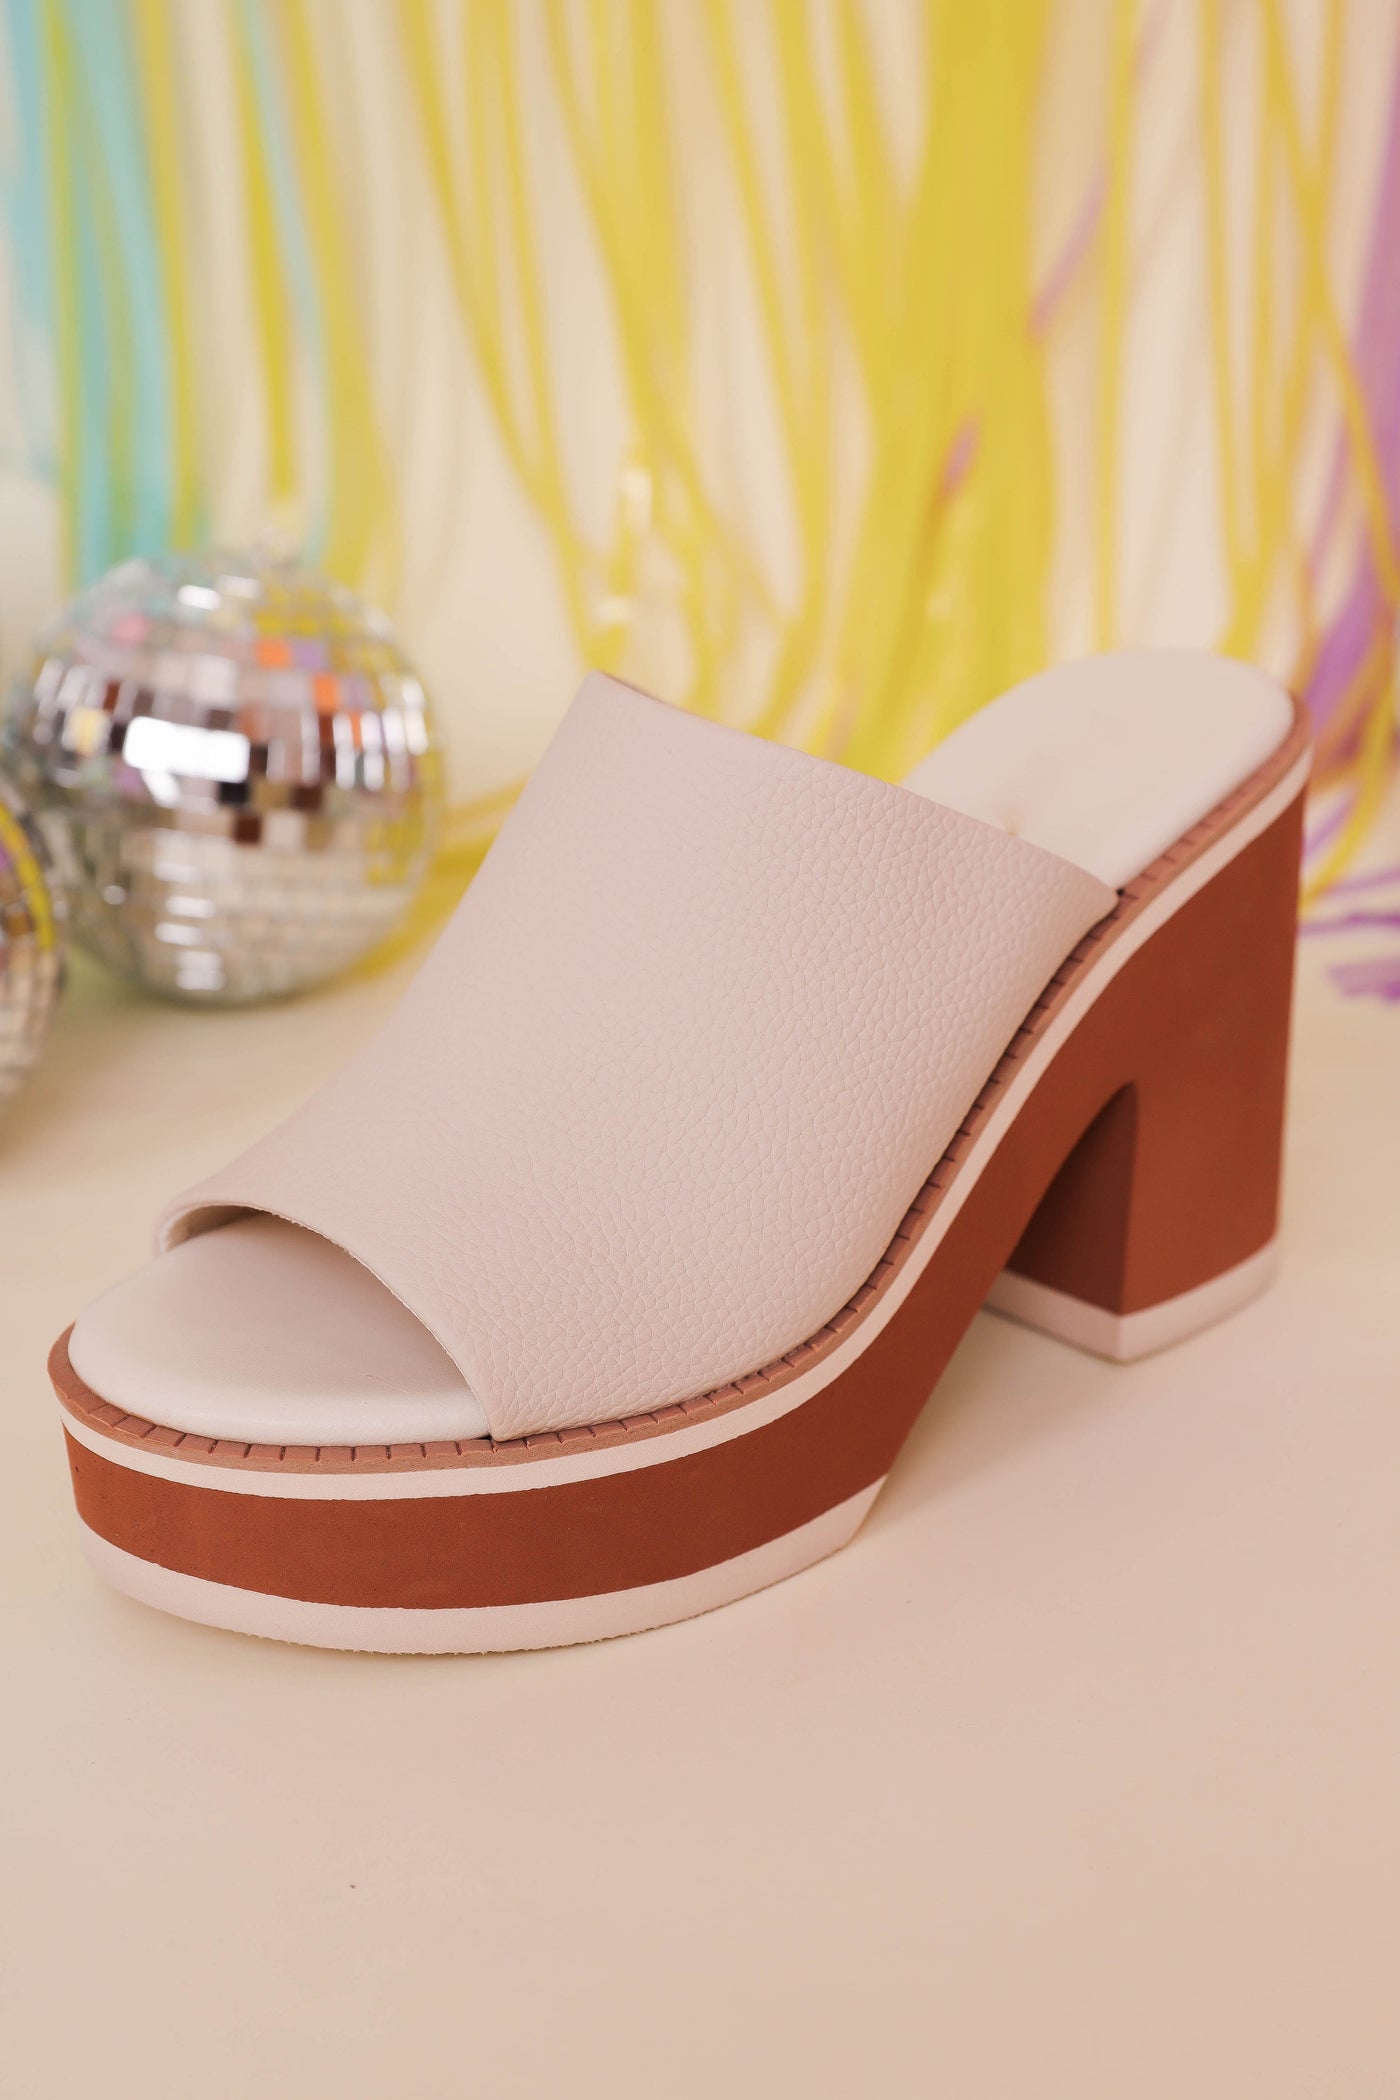 Ivory Platform Heel- Women's Platform Sandals- Designer Inspired Heels